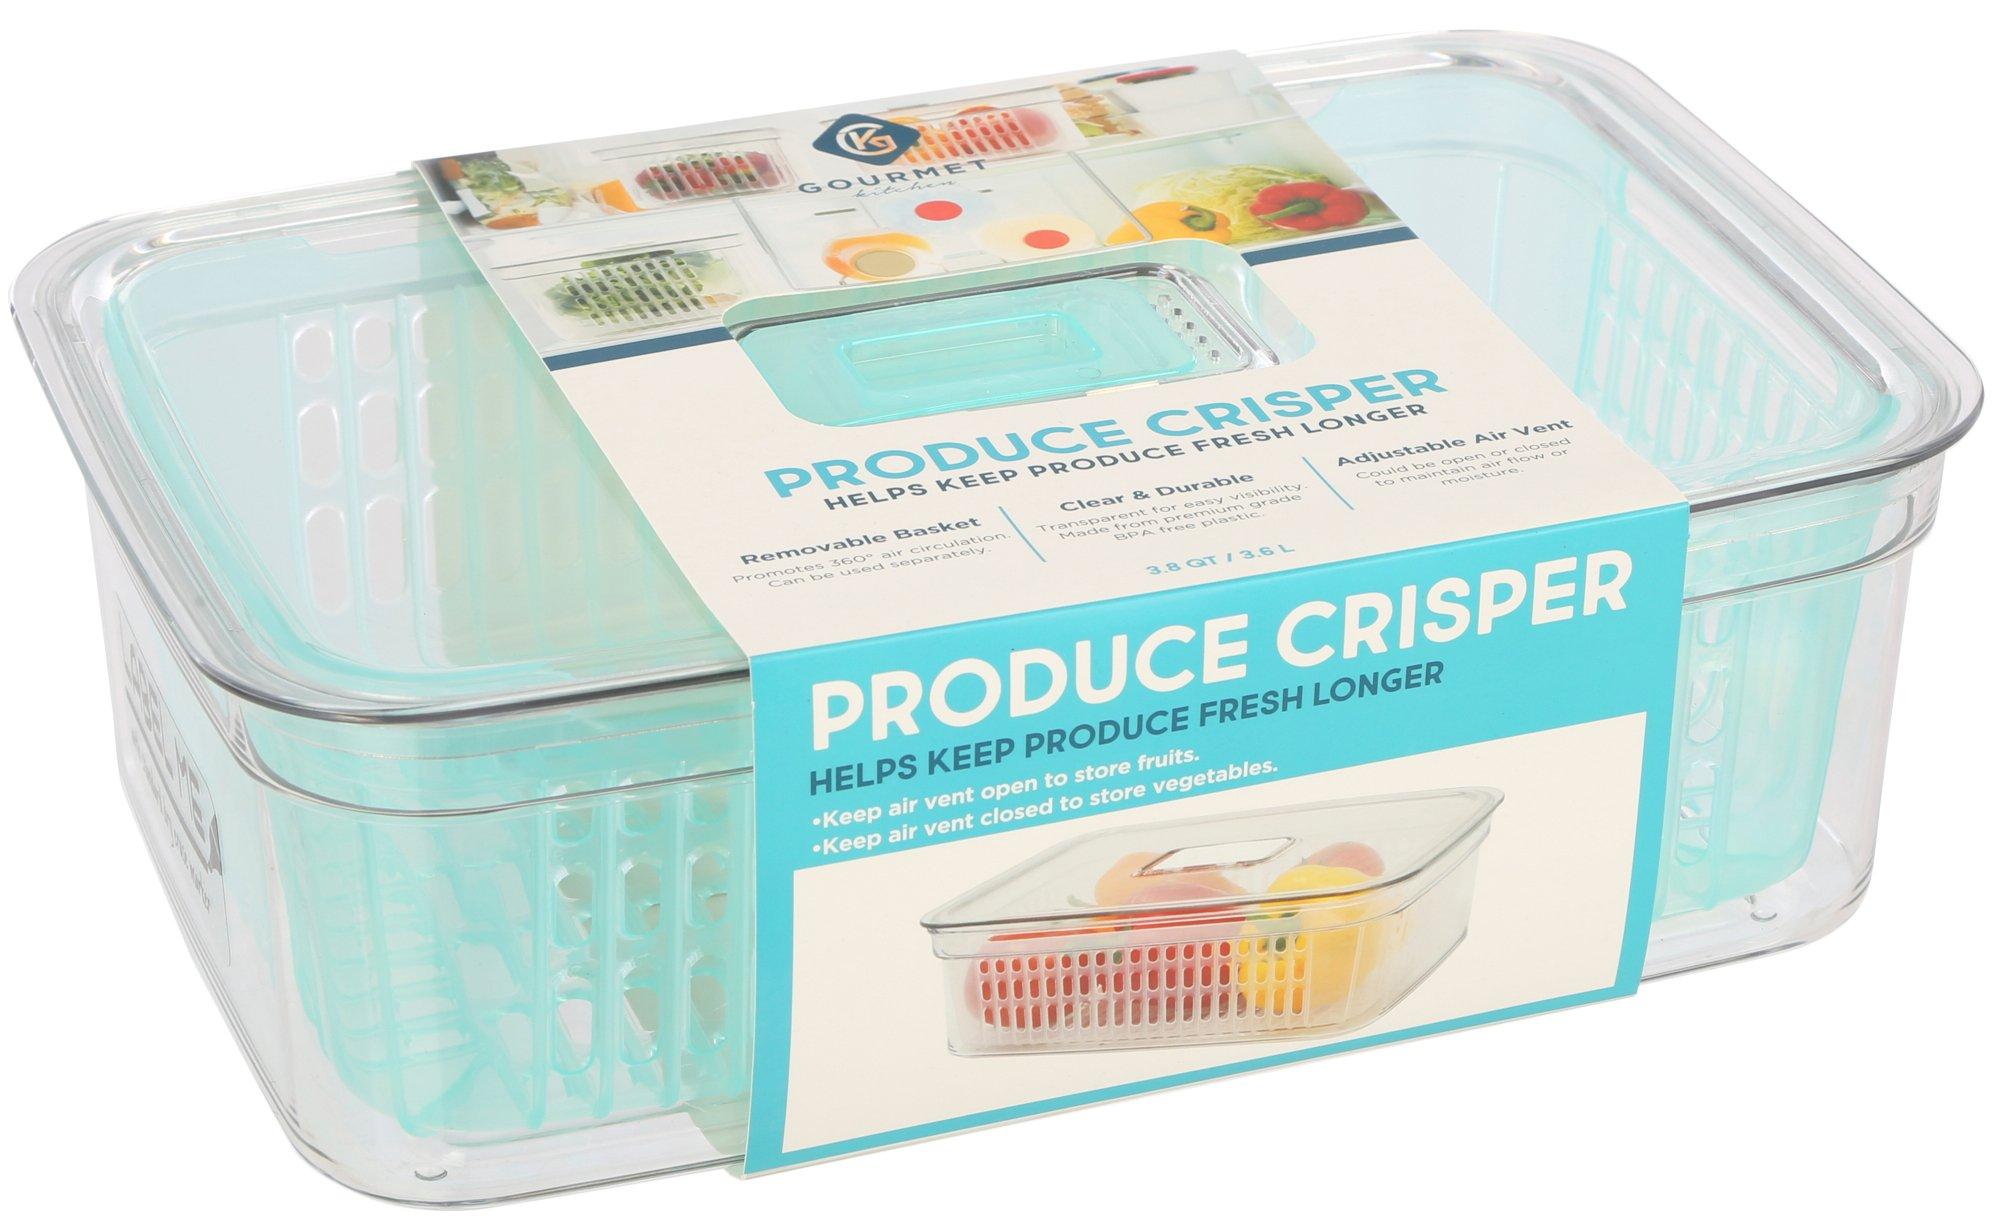 Produce Crisper